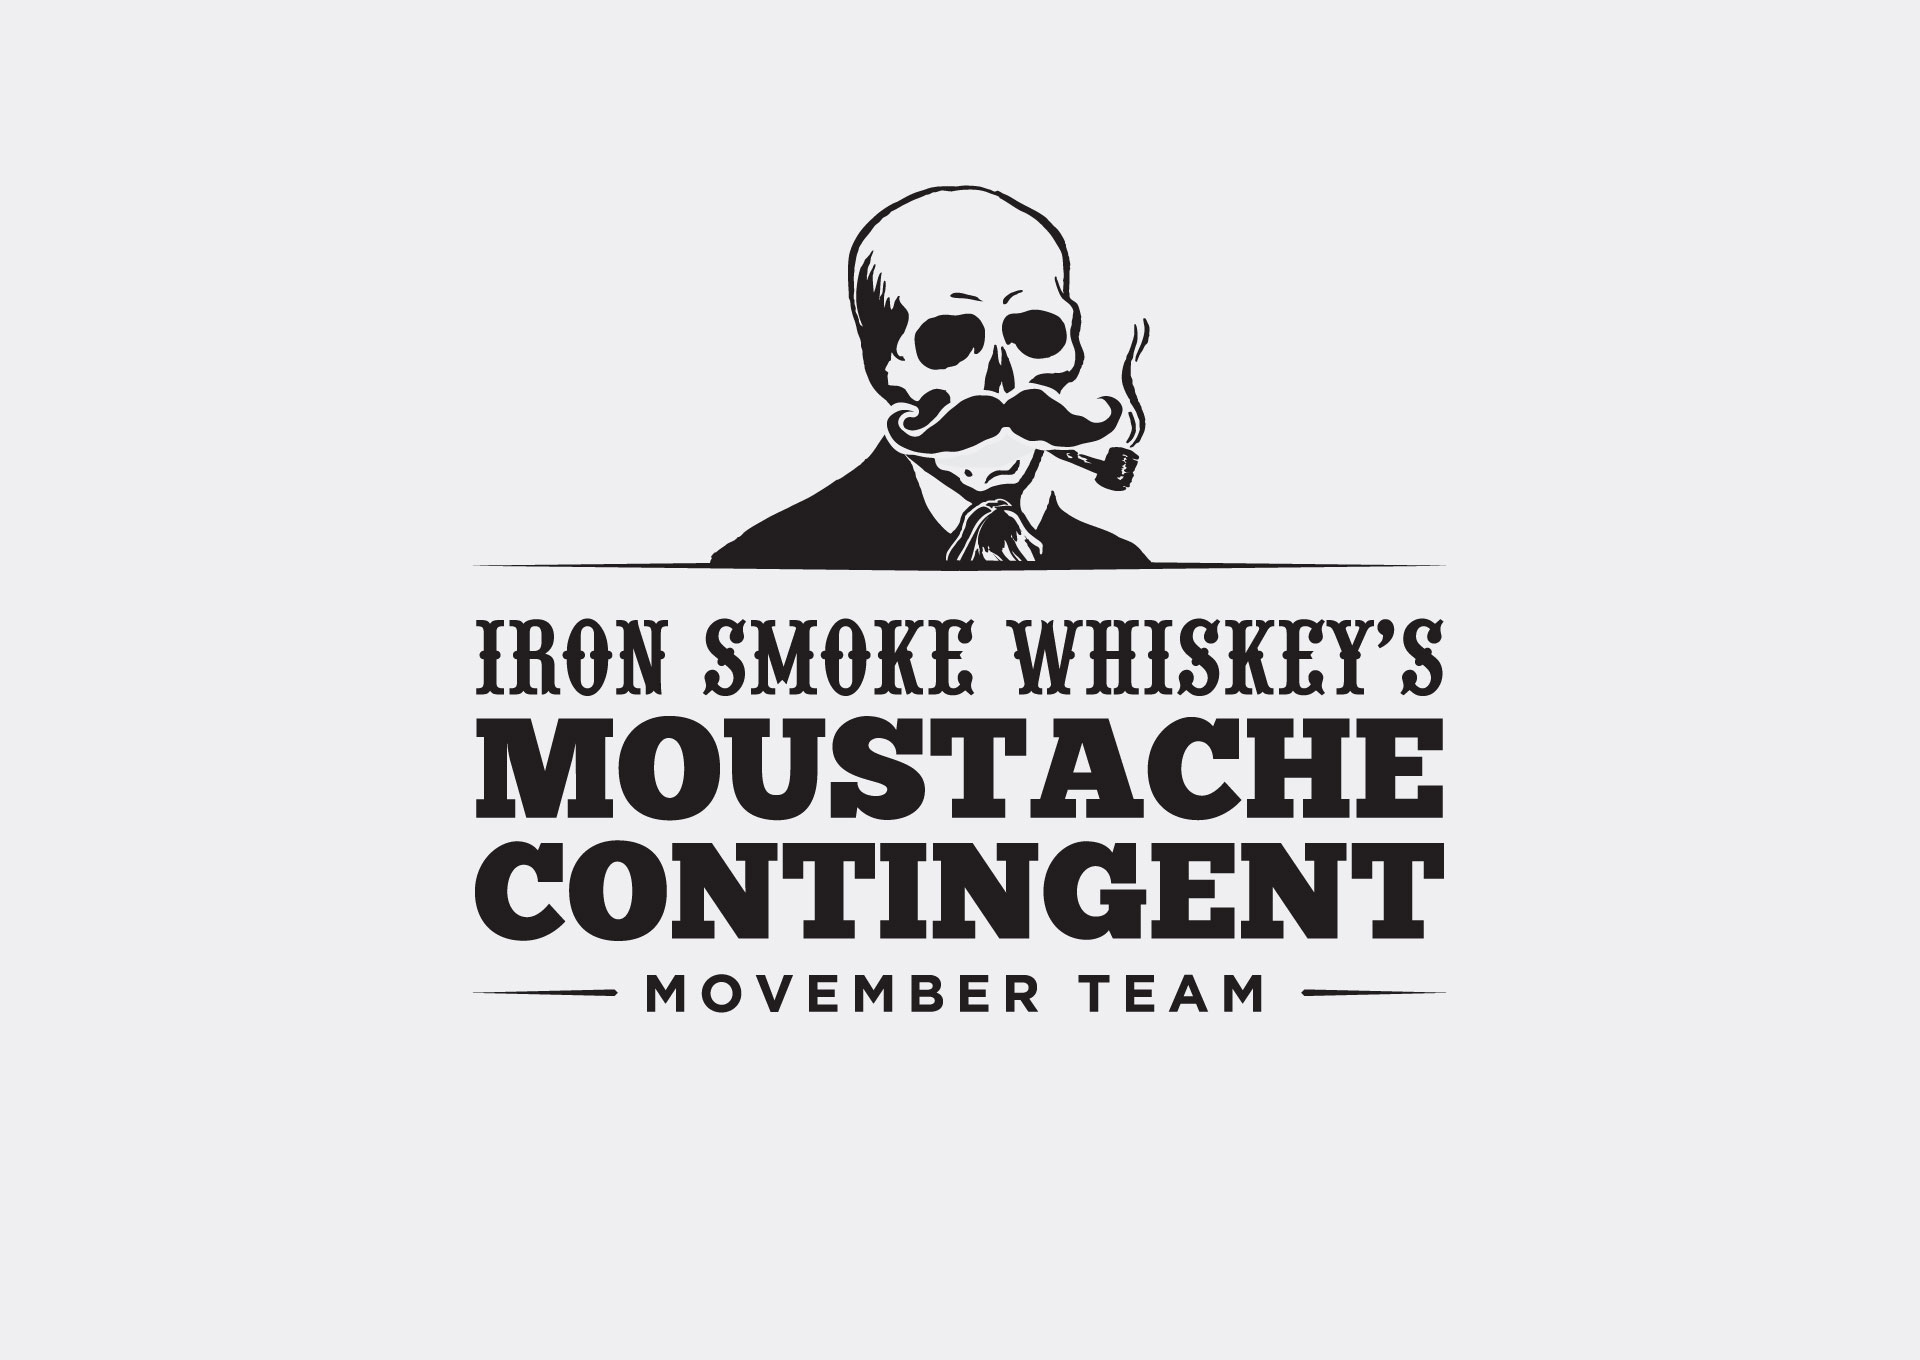 Iron Smoke Moustache Contingent Movember Team